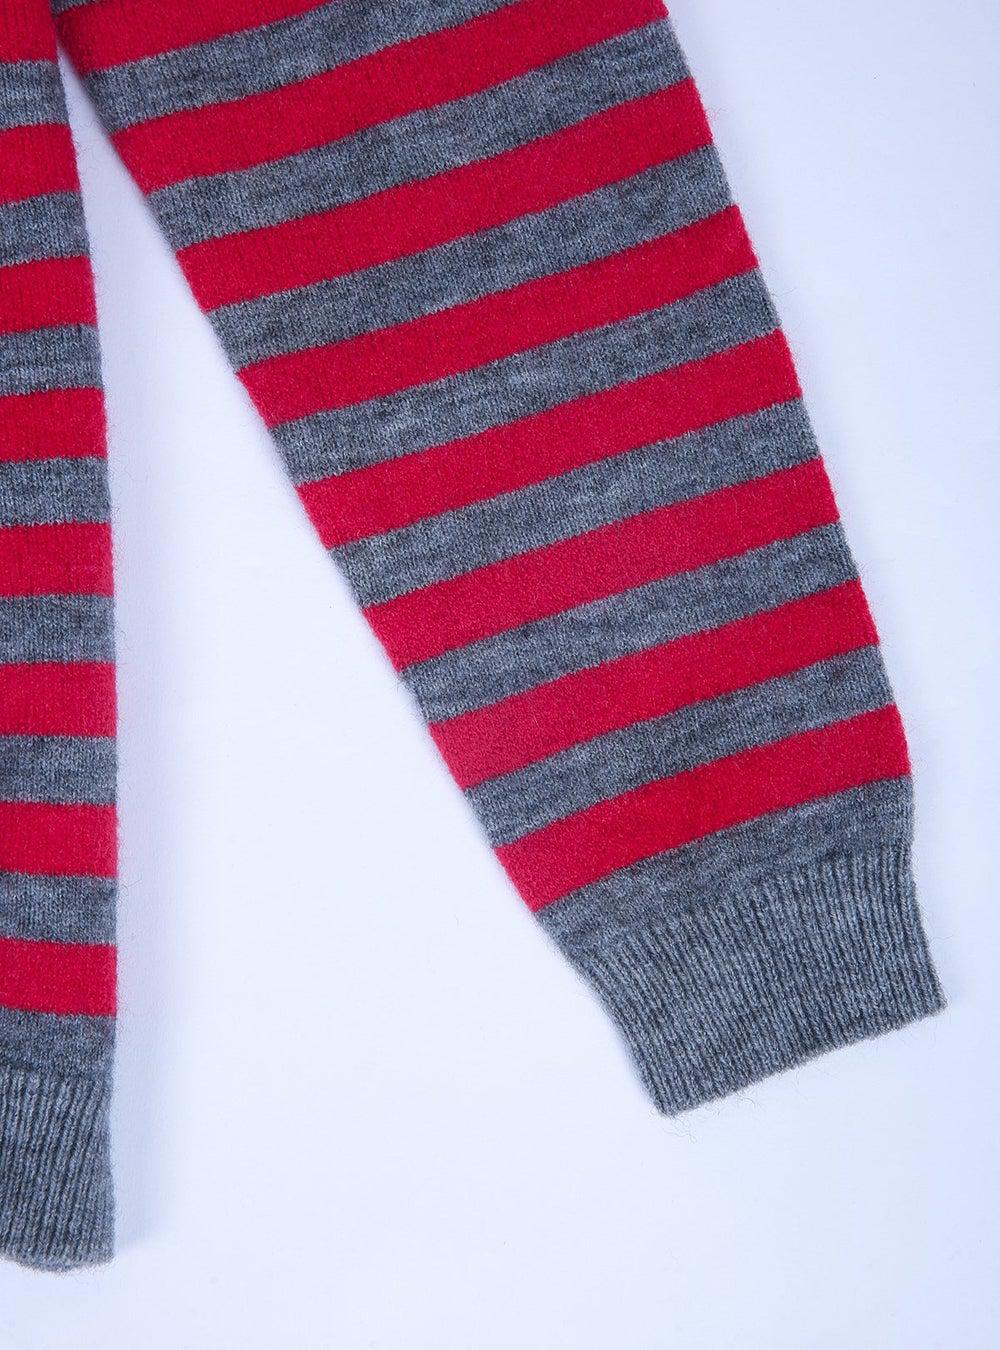 Retro Striped Print Red Sweater